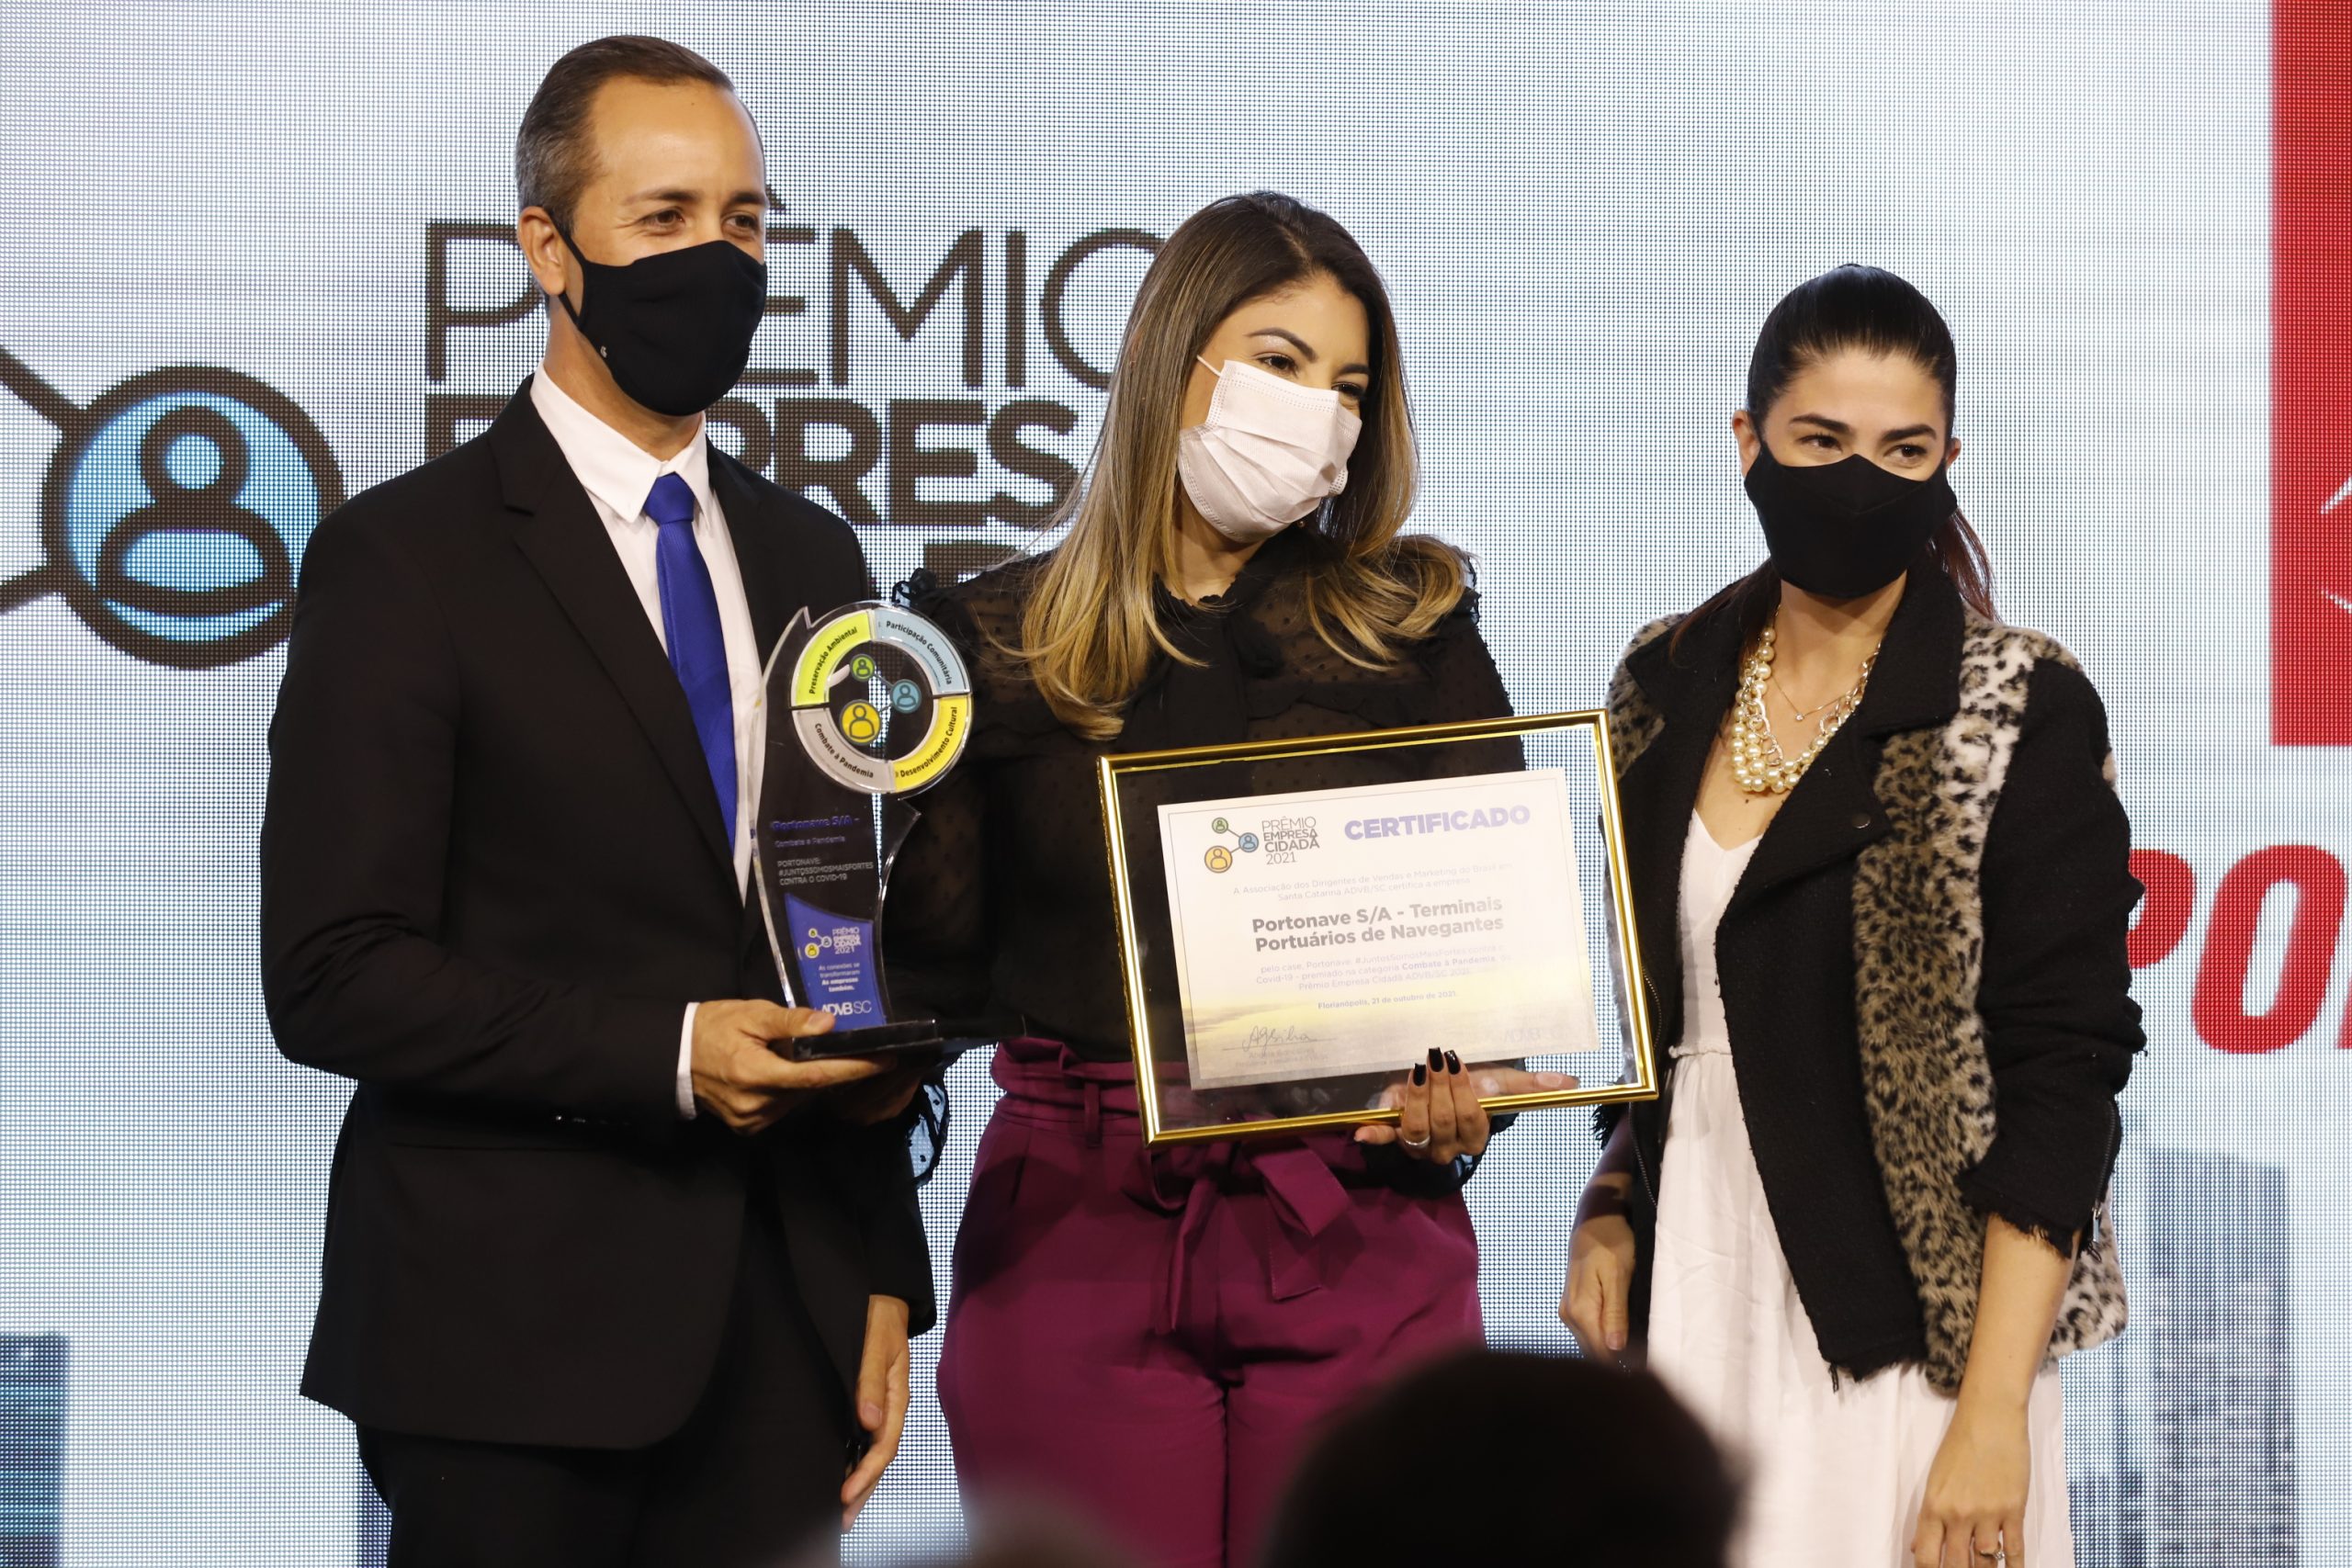 Portonave recebe o Prêmio Empresa Cidadã 2021 da ADVB